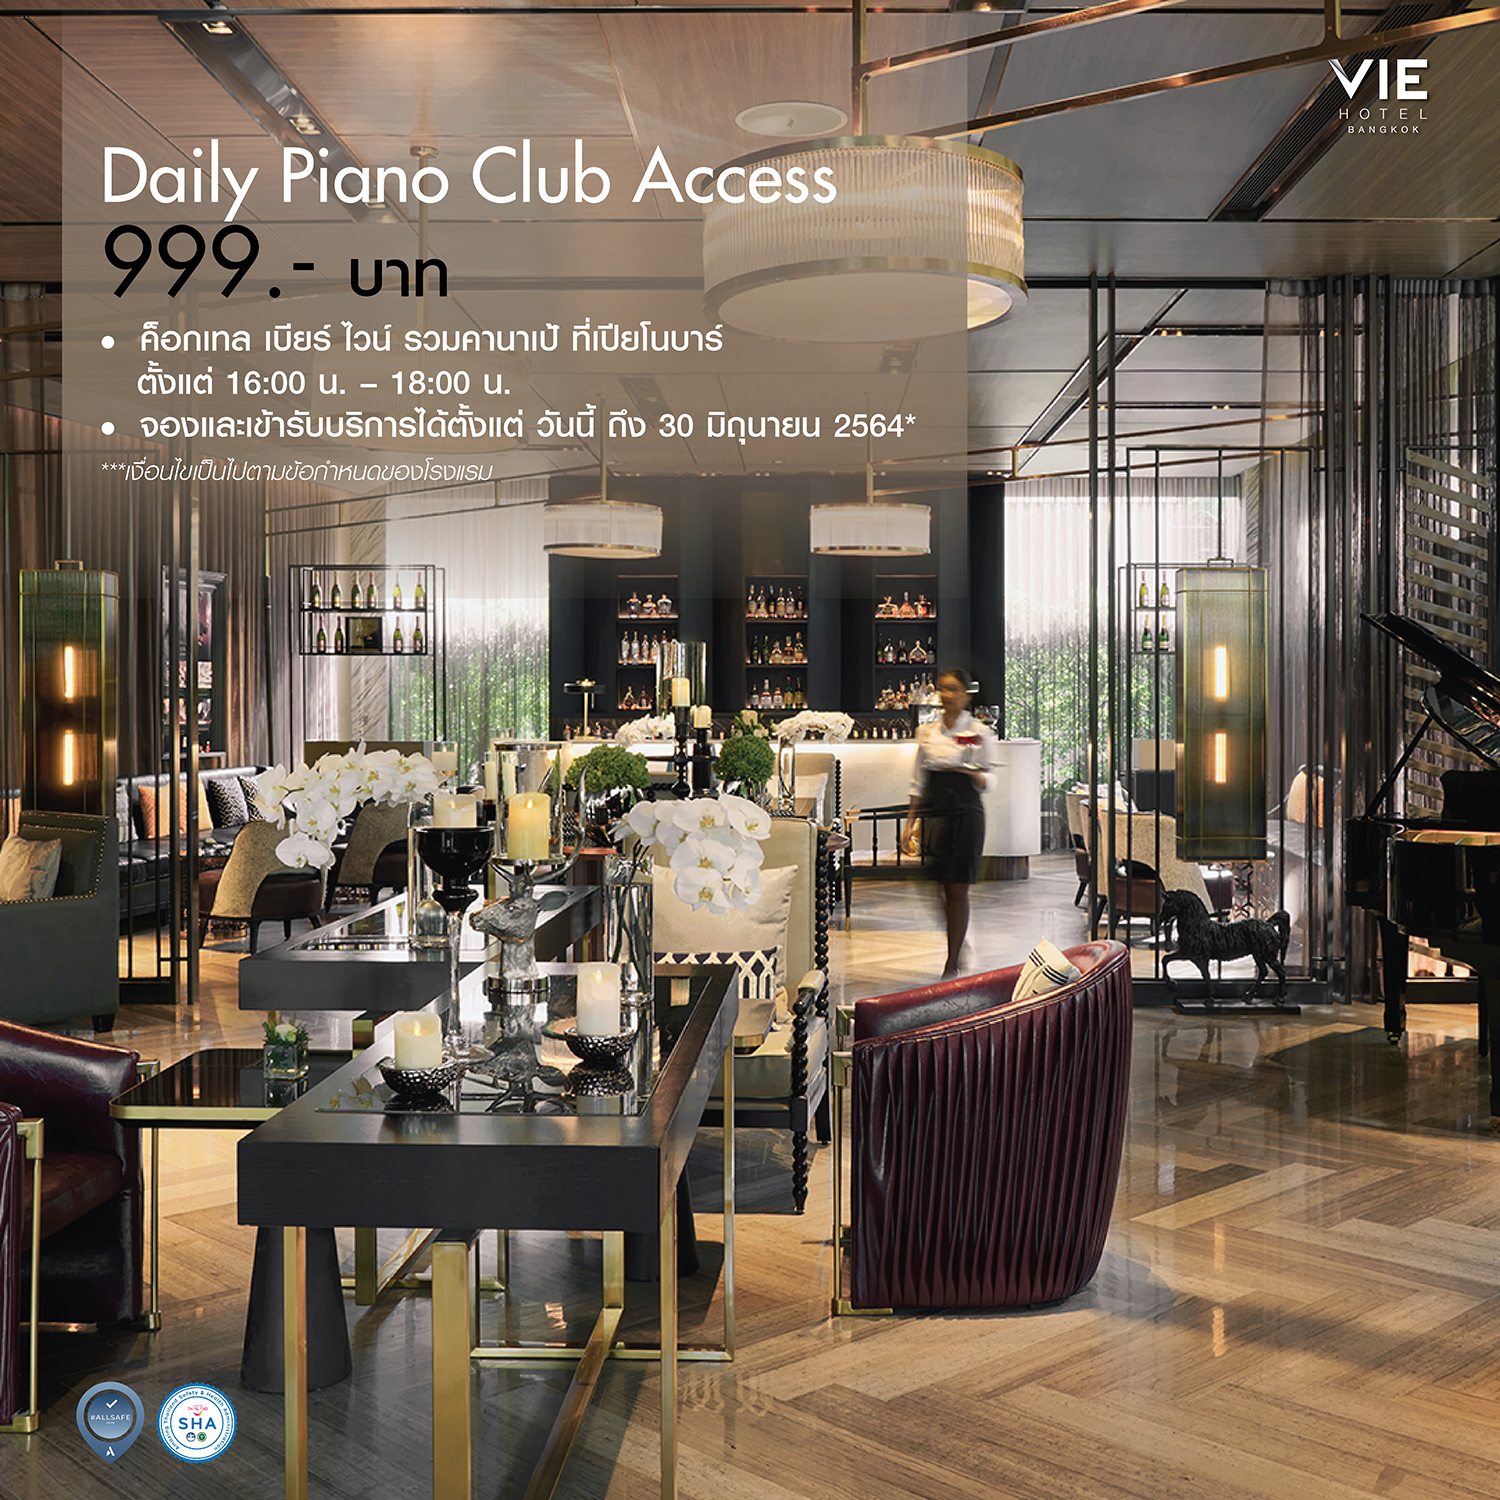 VIE Hotel Bangkok, MGallery - Daily Piano Club Access  ค็อกเทล เบียร์ ไวน์ คานาเป้ ที่เปียโนบาร์ ระหว่างเวลา 15:30 - 17:30 น. ราคาพิเศษท่านละ 999 บาทสุทธิ